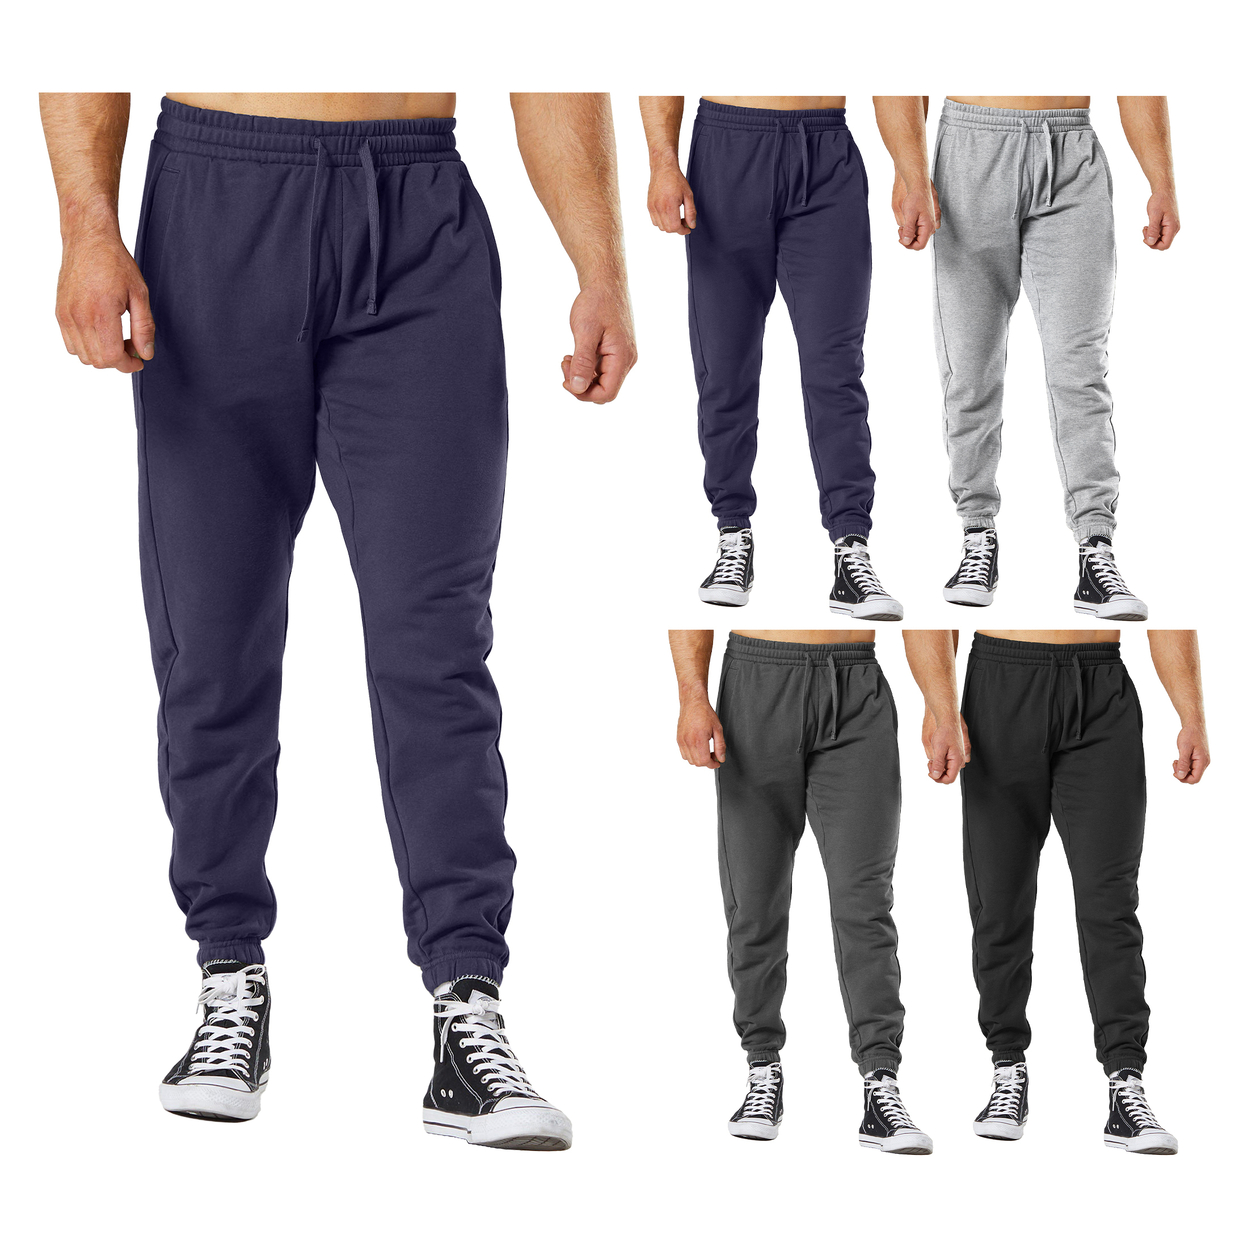 2-Pack: Men's Ultra-Soft Cozy Winter Warm Casual Fleece-Lined Sweatpants Jogger - Black & Grey, X-large